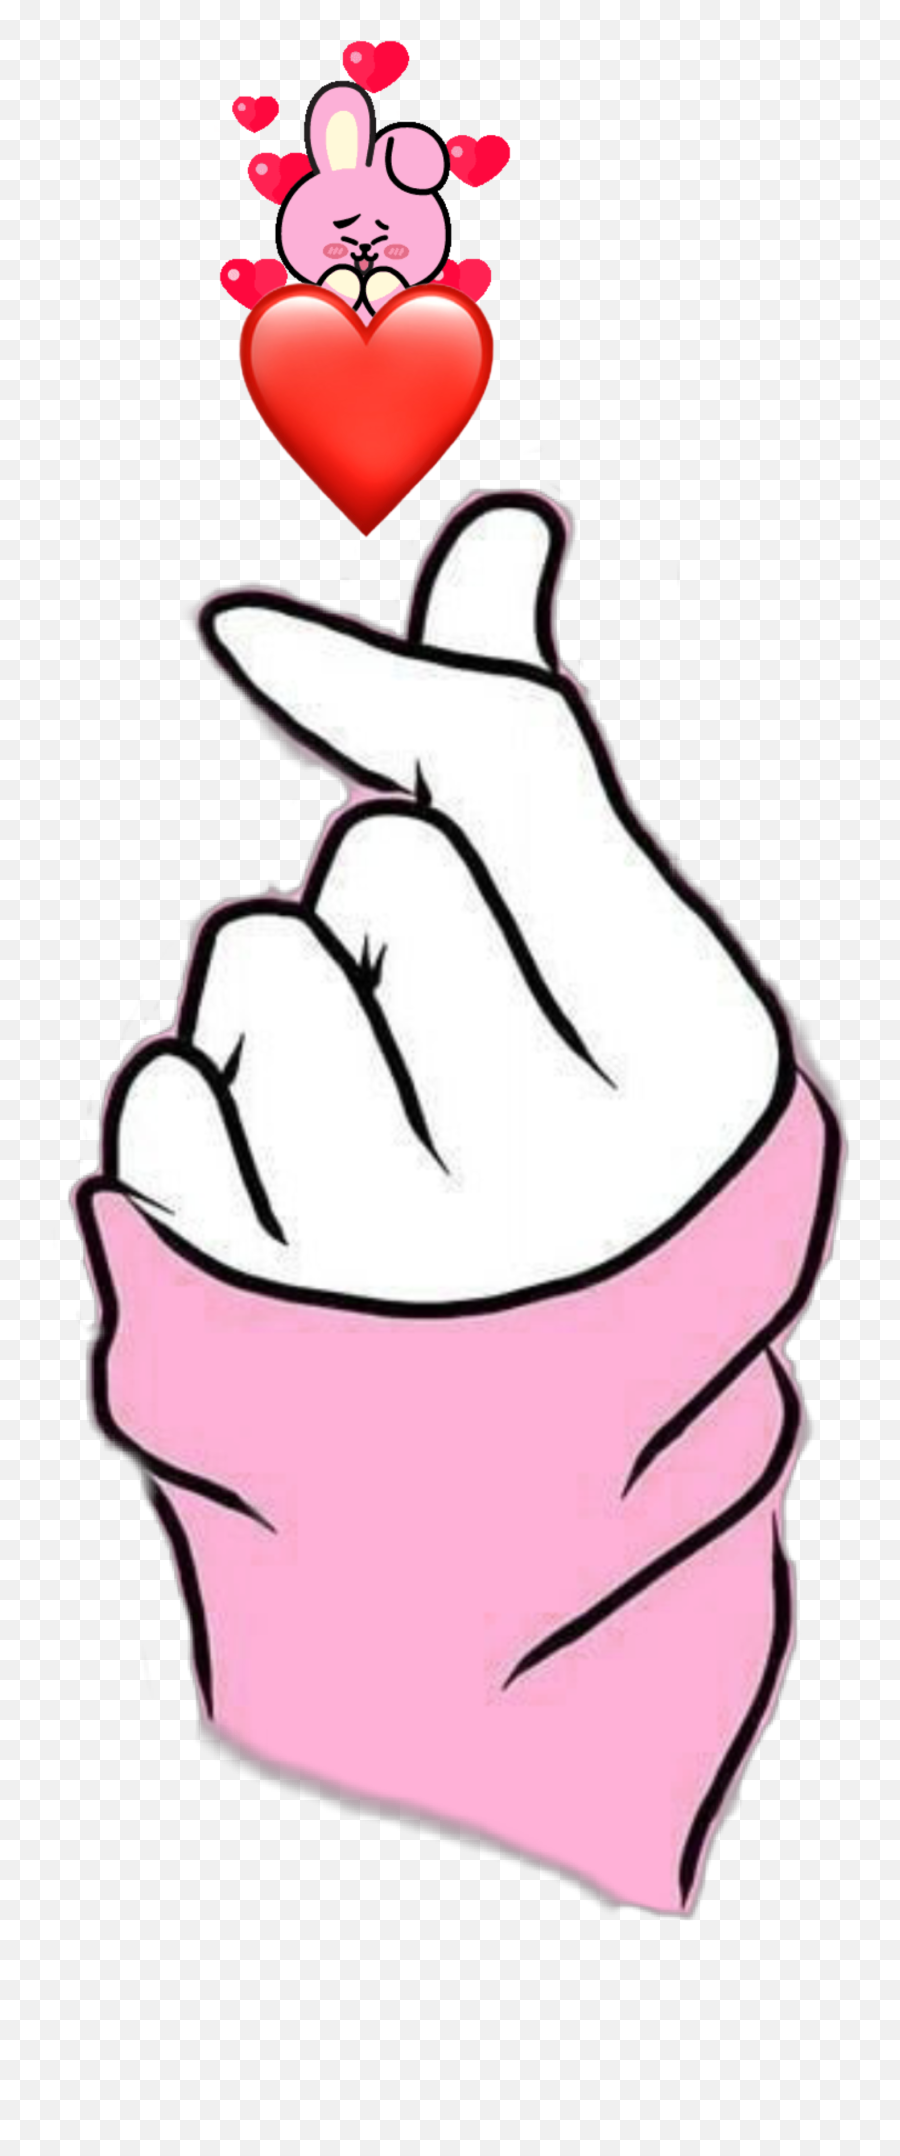 The Most Edited Wallpaper Cute Girly Emoji, Korean Finger Heart Emoticon Emoji PNG Image